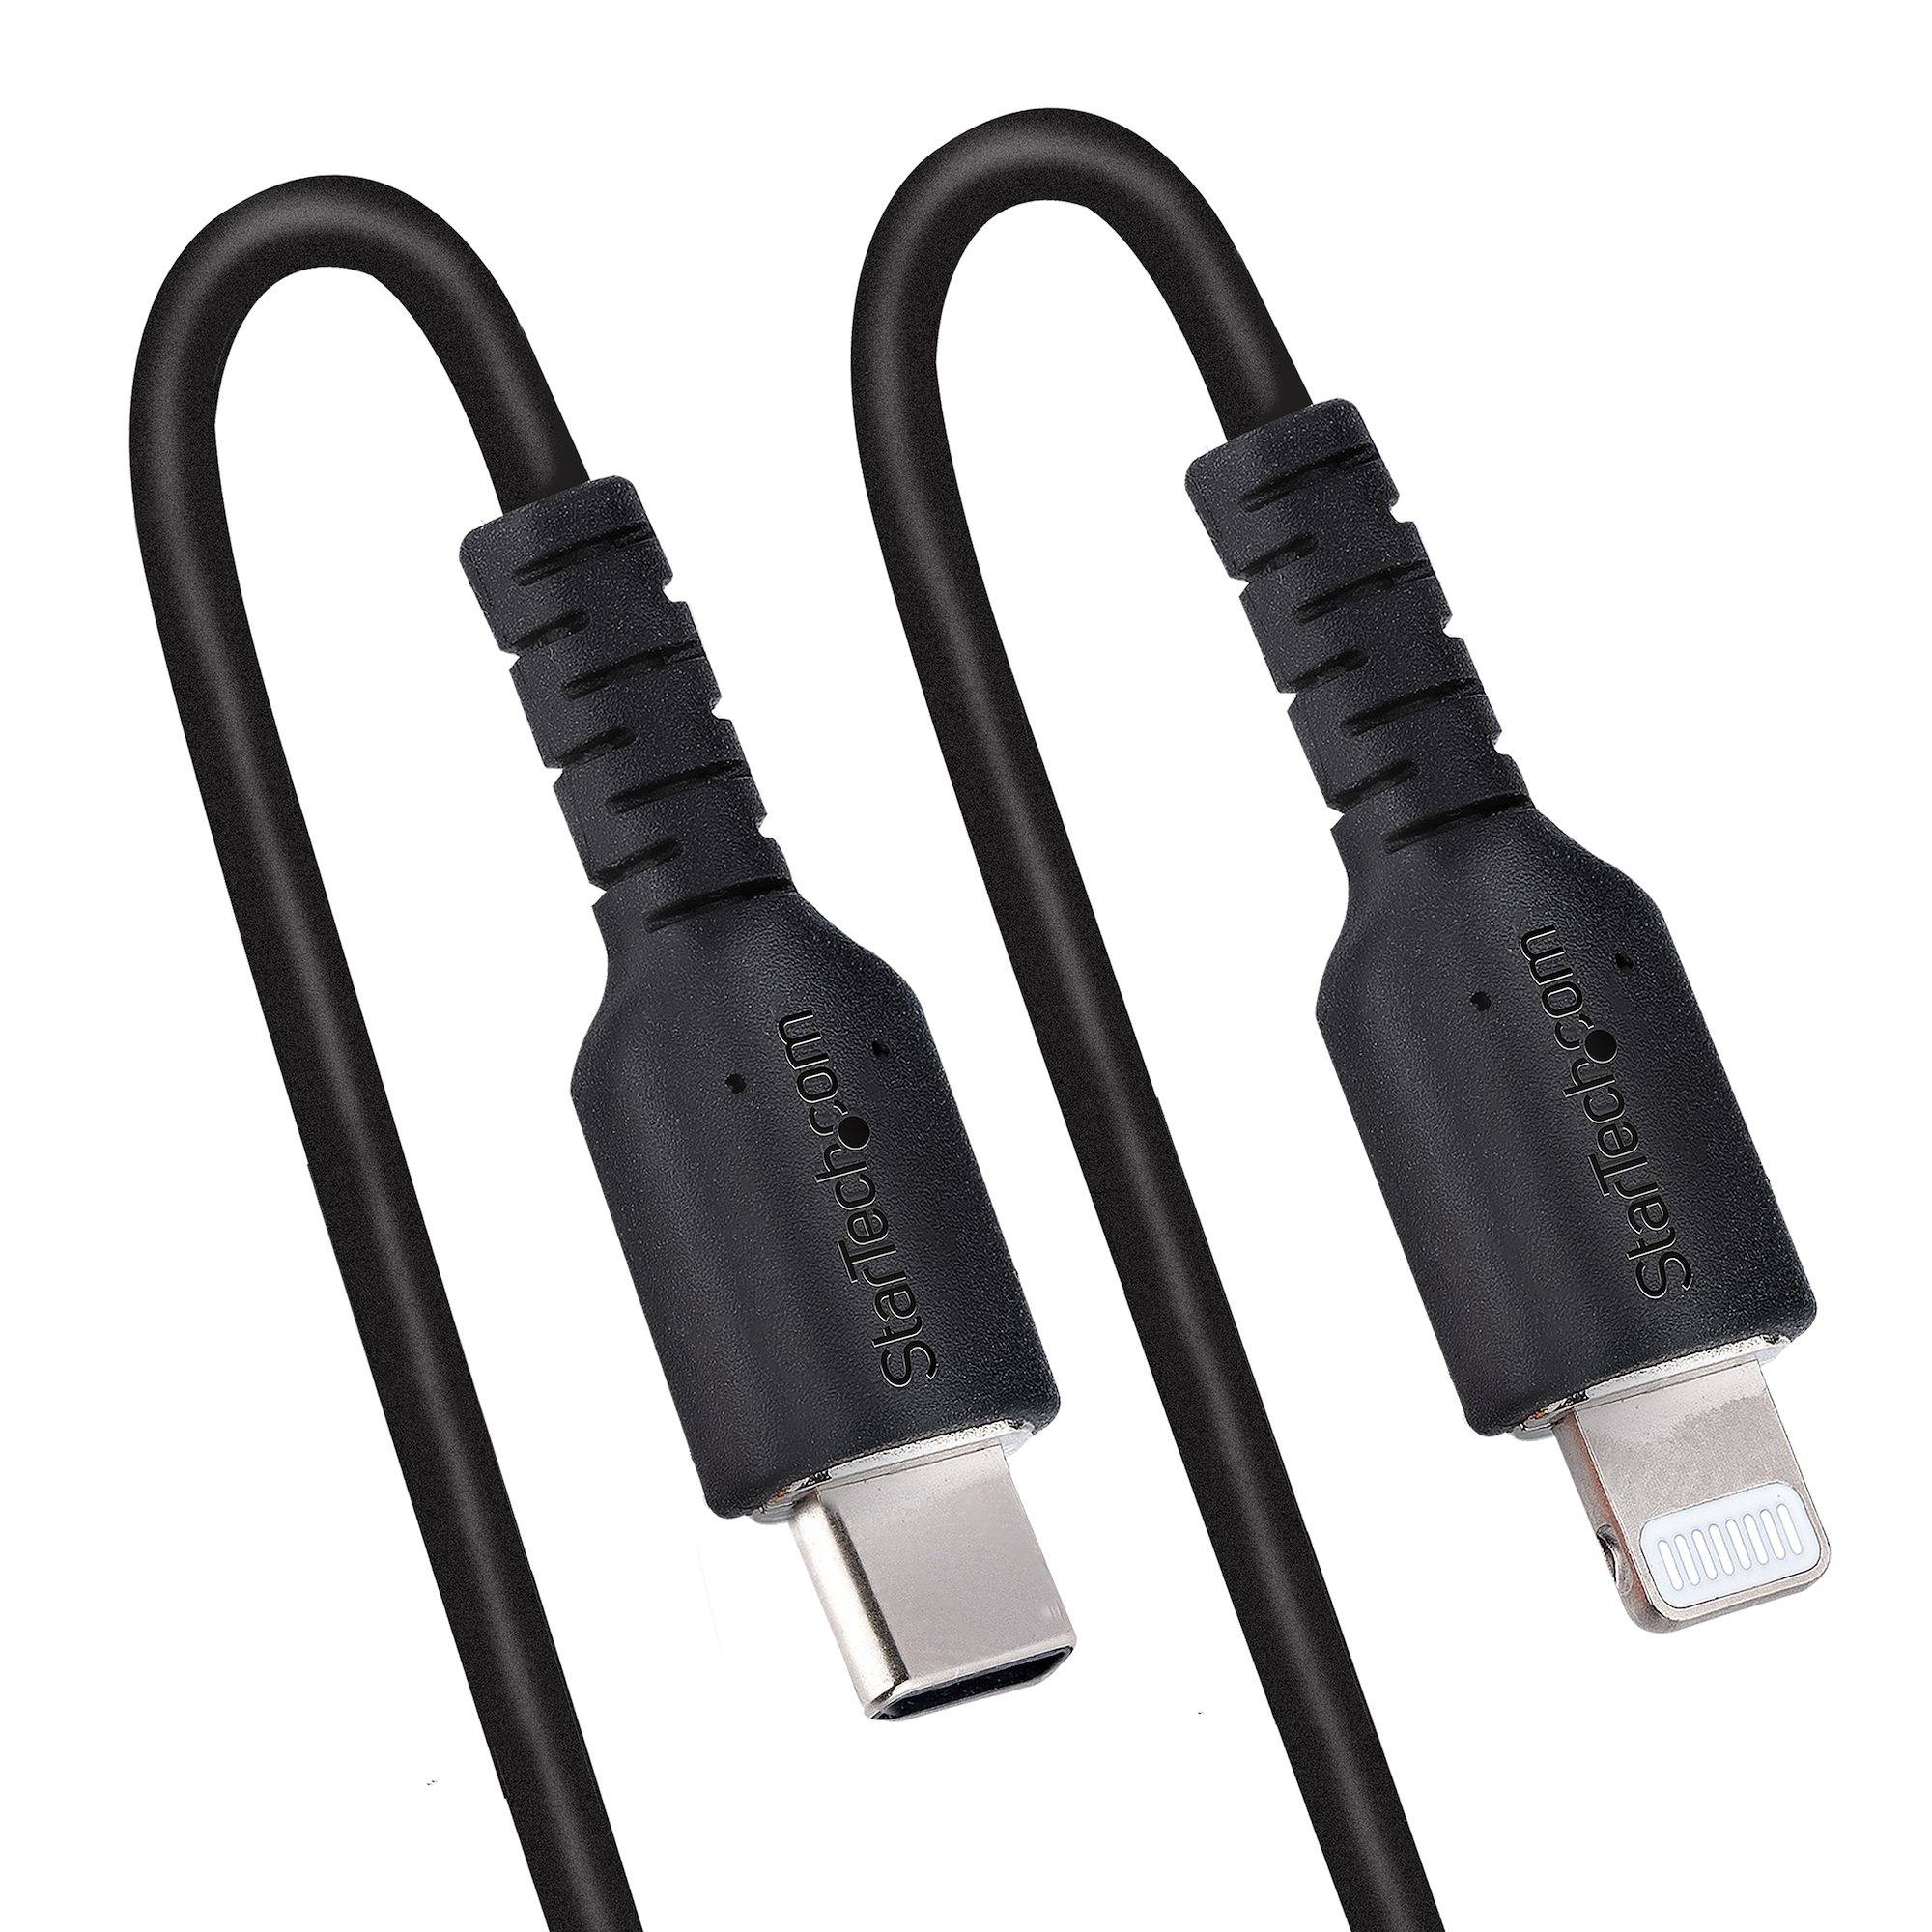 Rca Informatique - image du produit : USB C TO LIGHTNING CABLE - 50CM (20IN) COILED CABLE BLACK